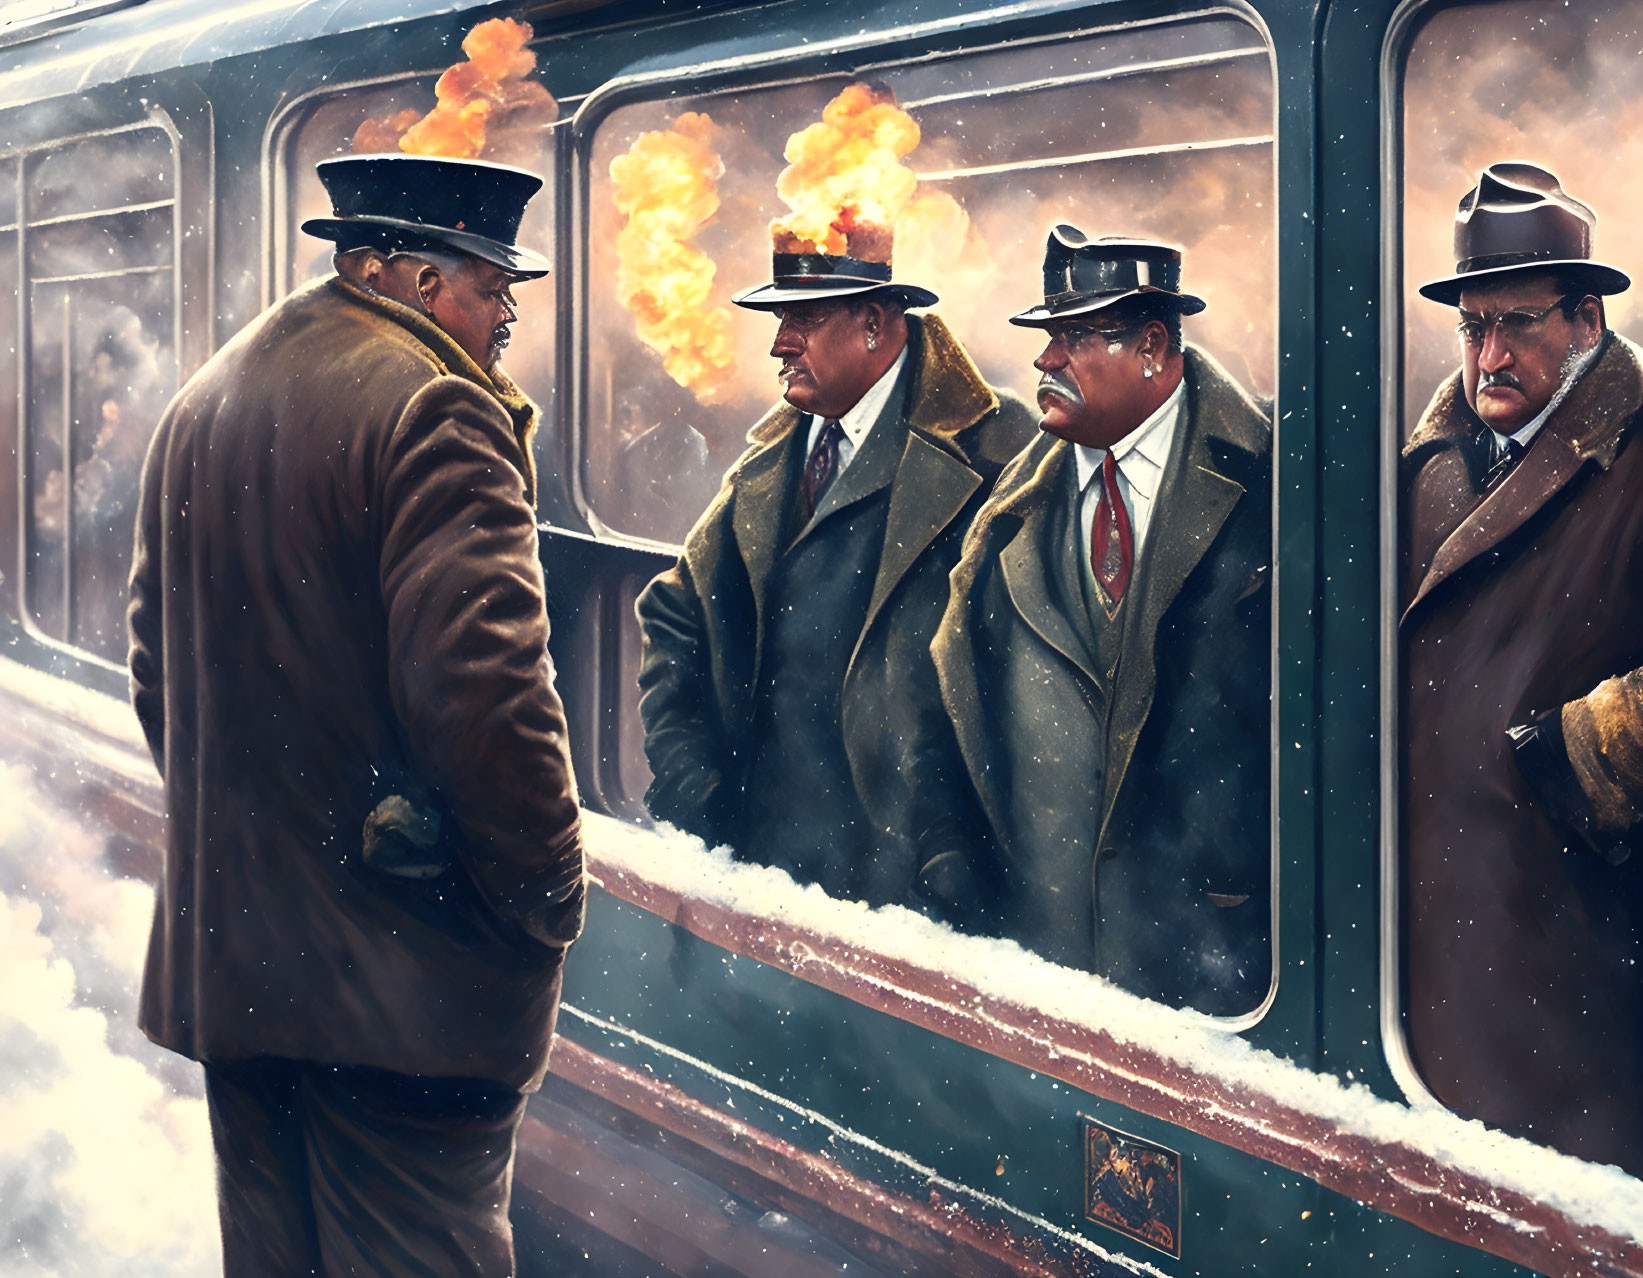 Vintage attired men near steam-emitting train in snowy setting